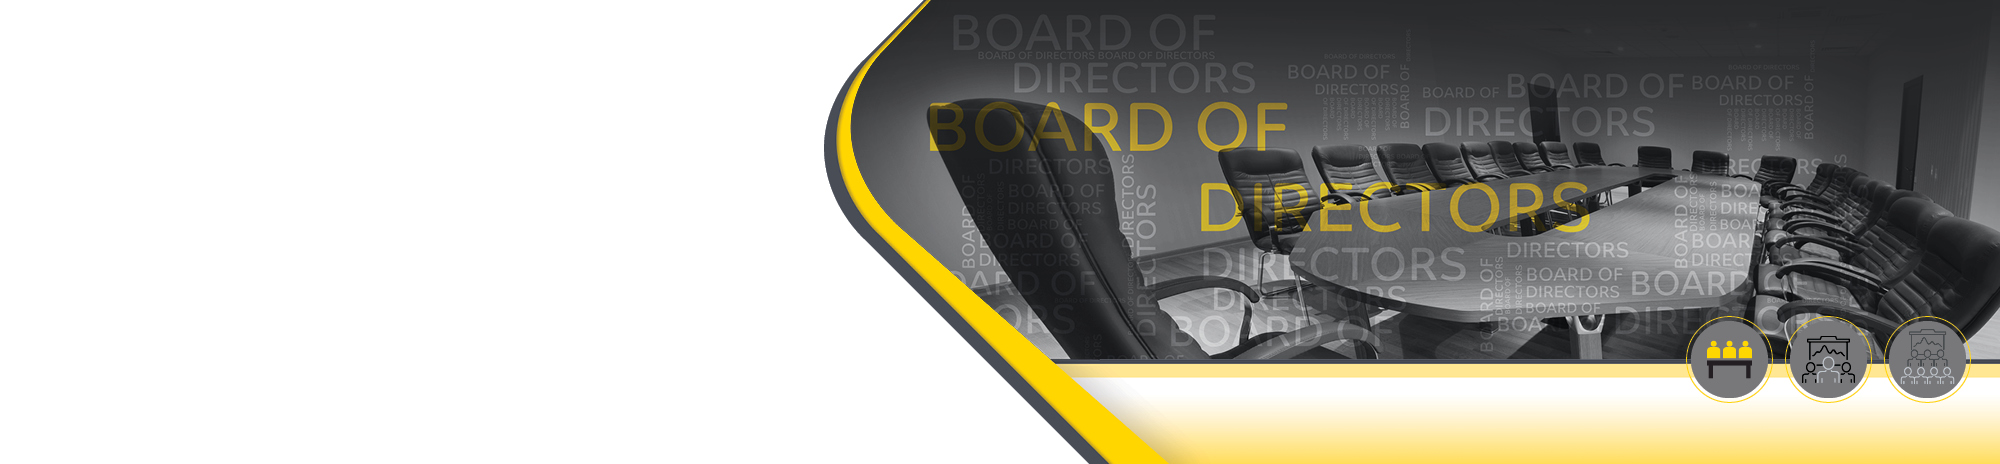 board-of-directors-en